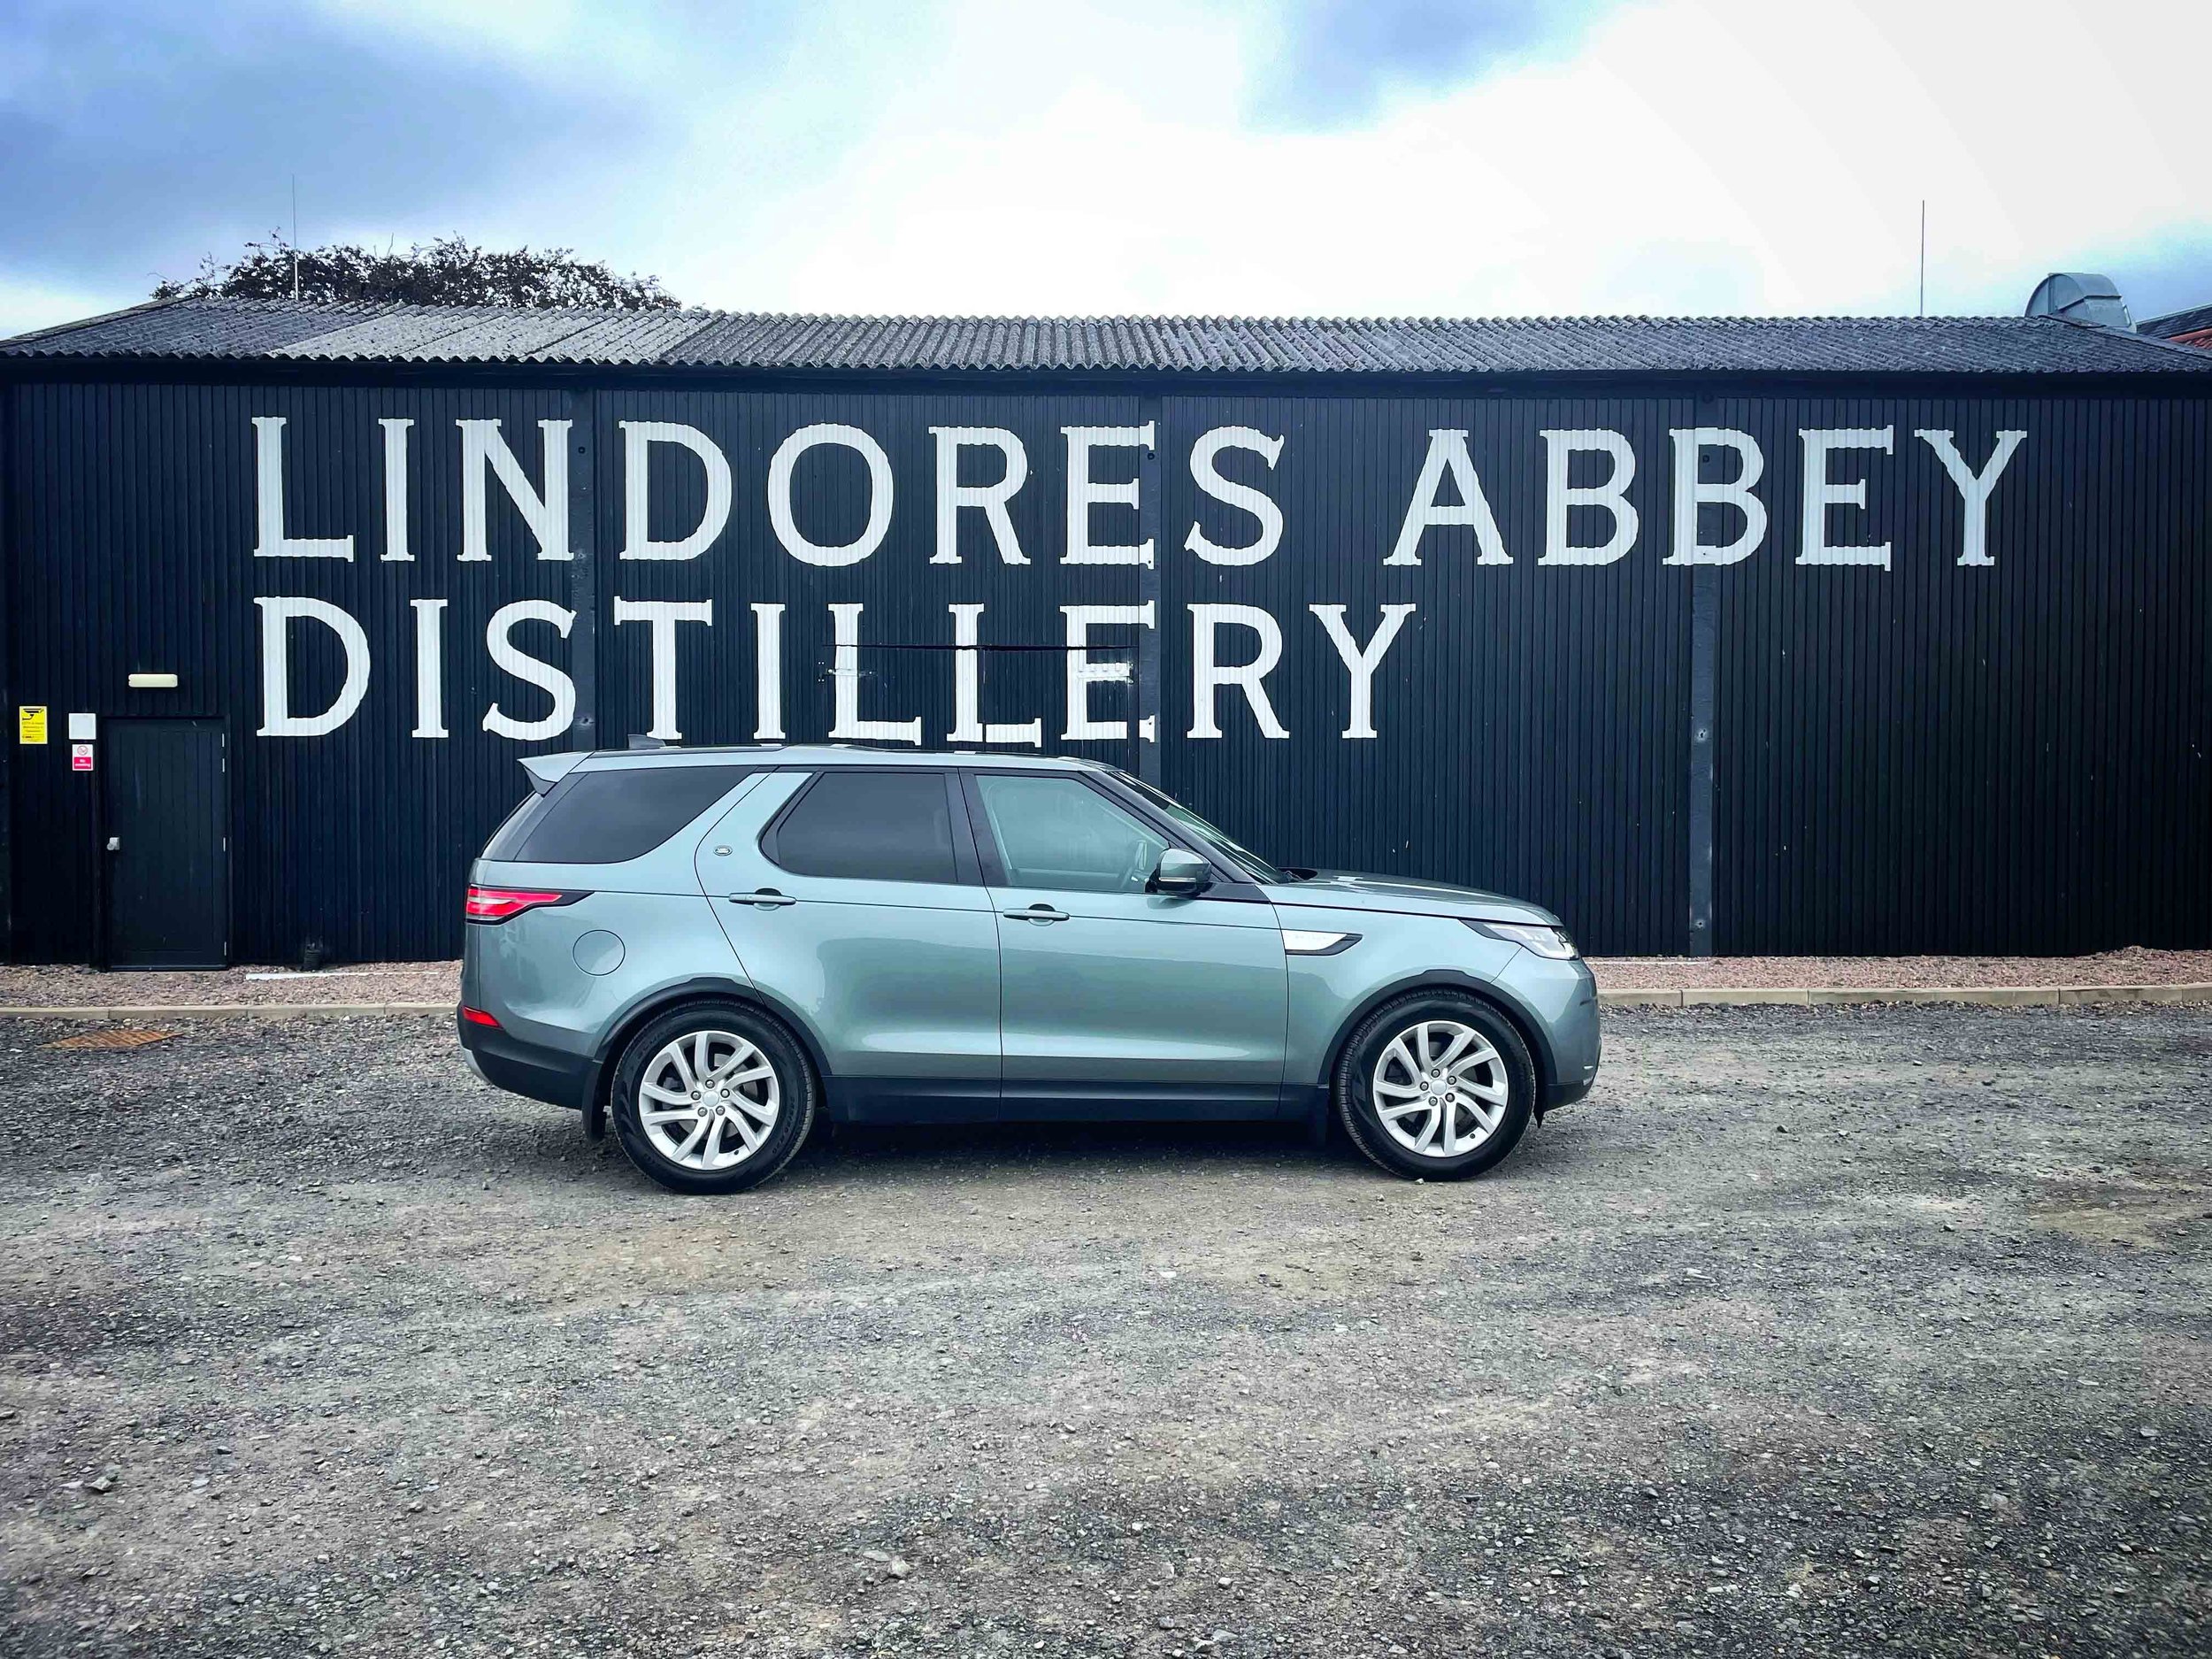 Lindors Abbey Distillery